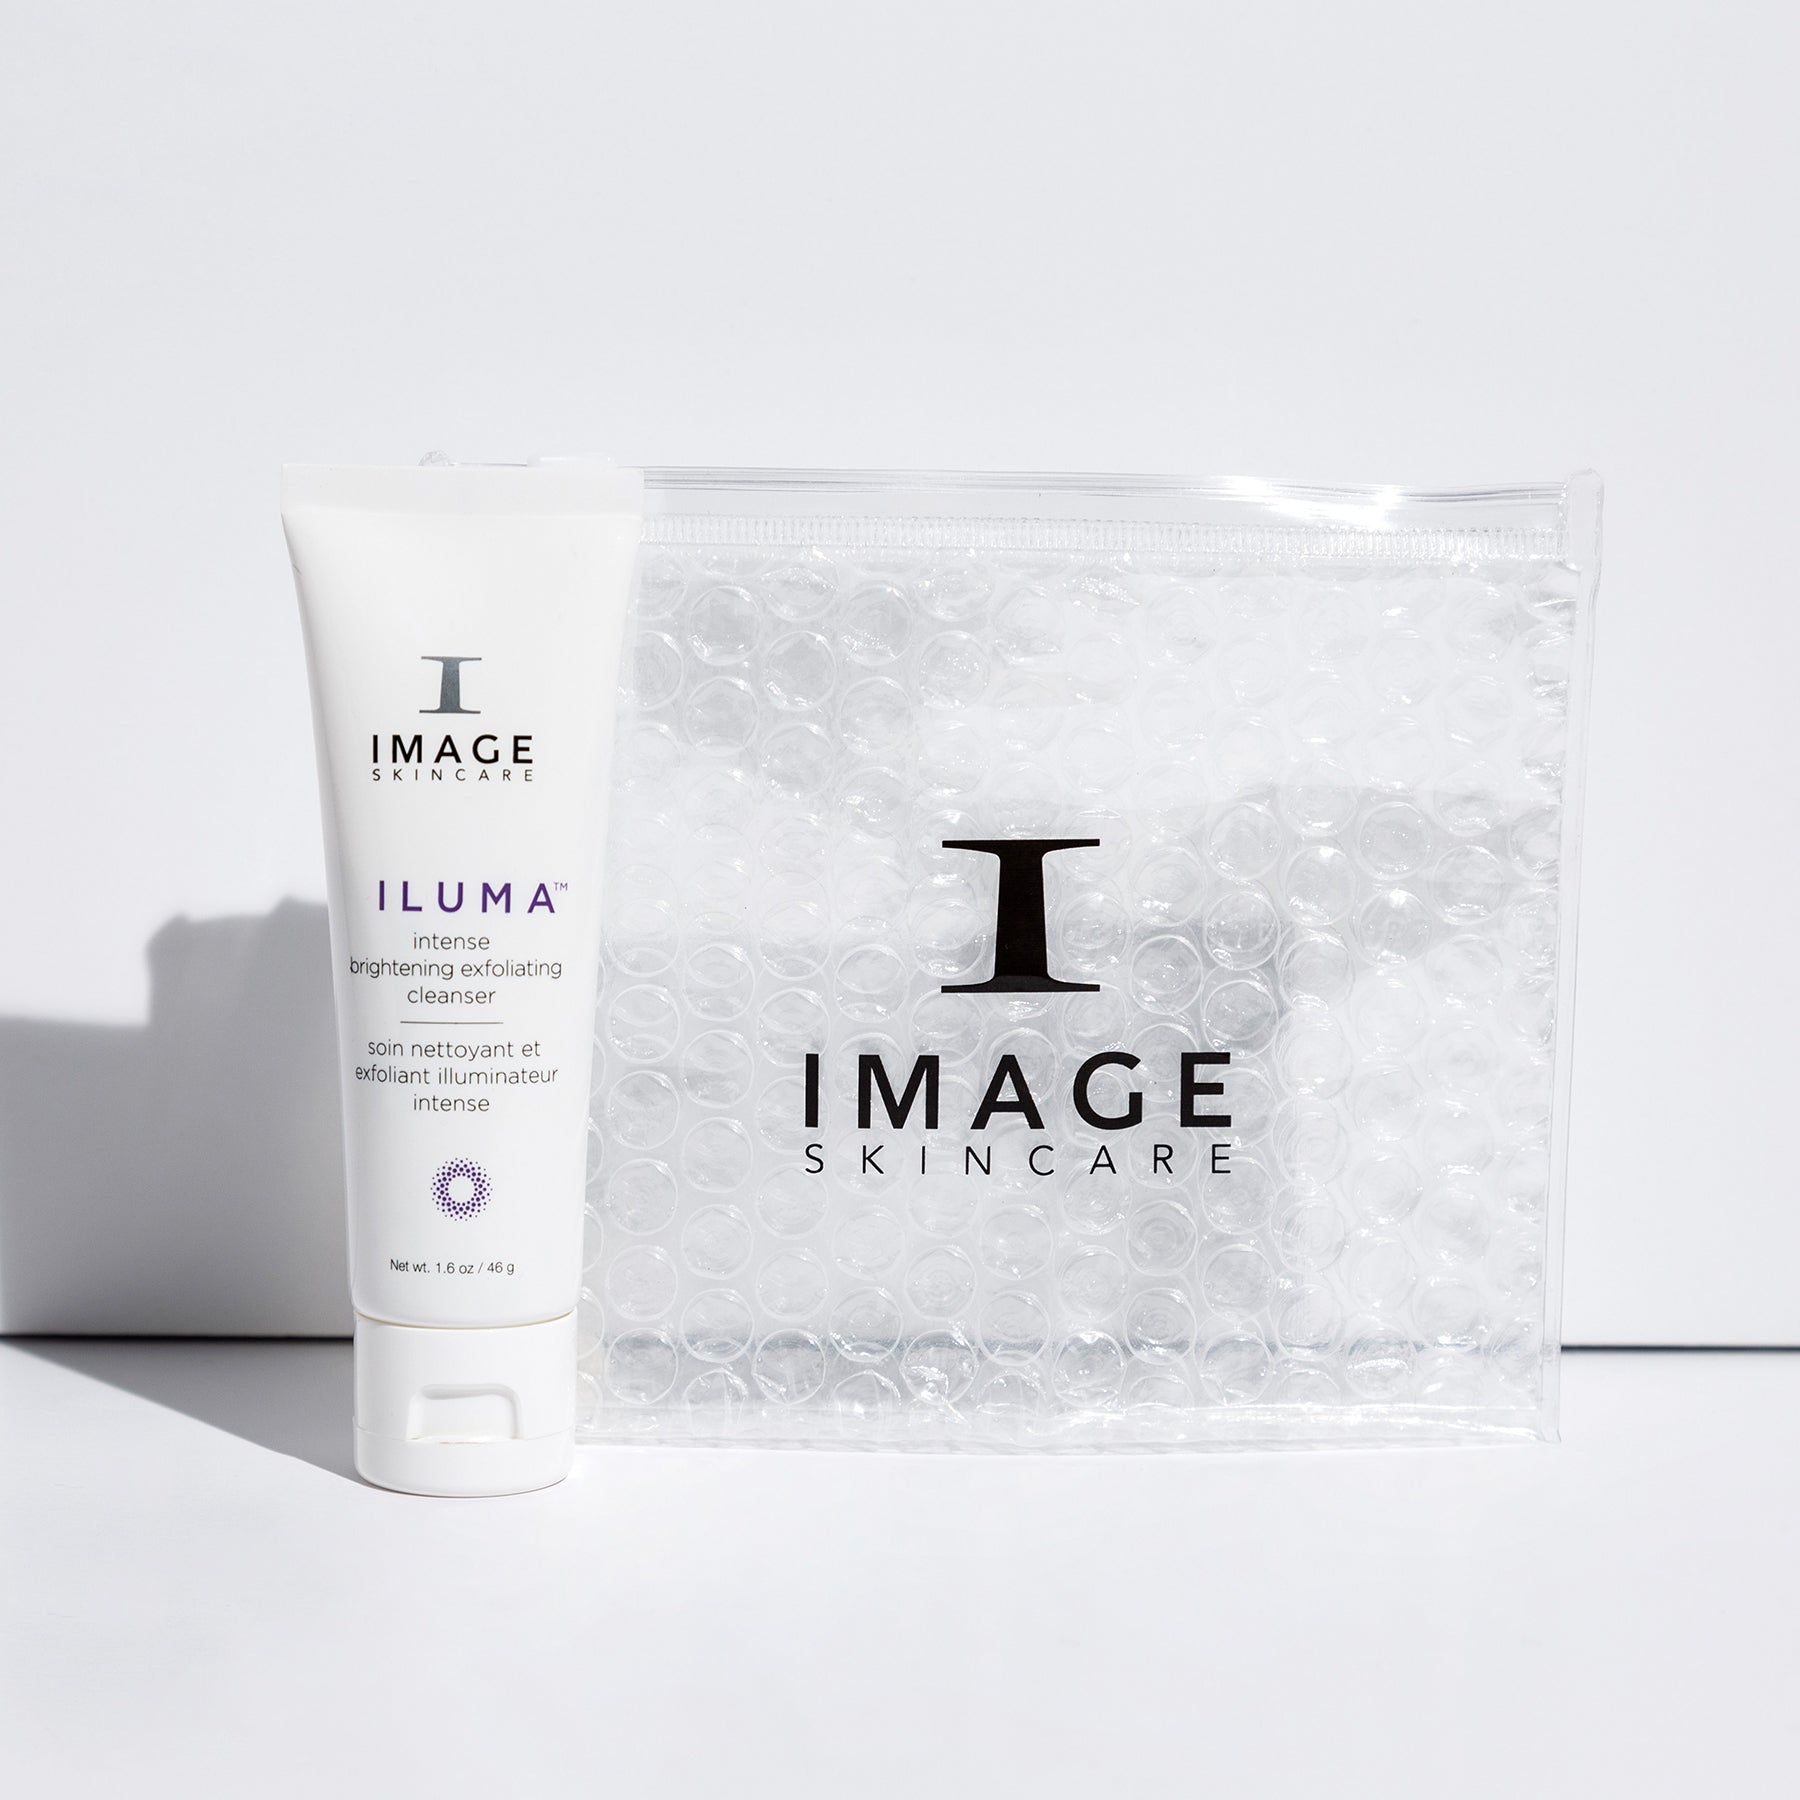 ILUMA® intense brightening exfoliating cleanser discovery-size